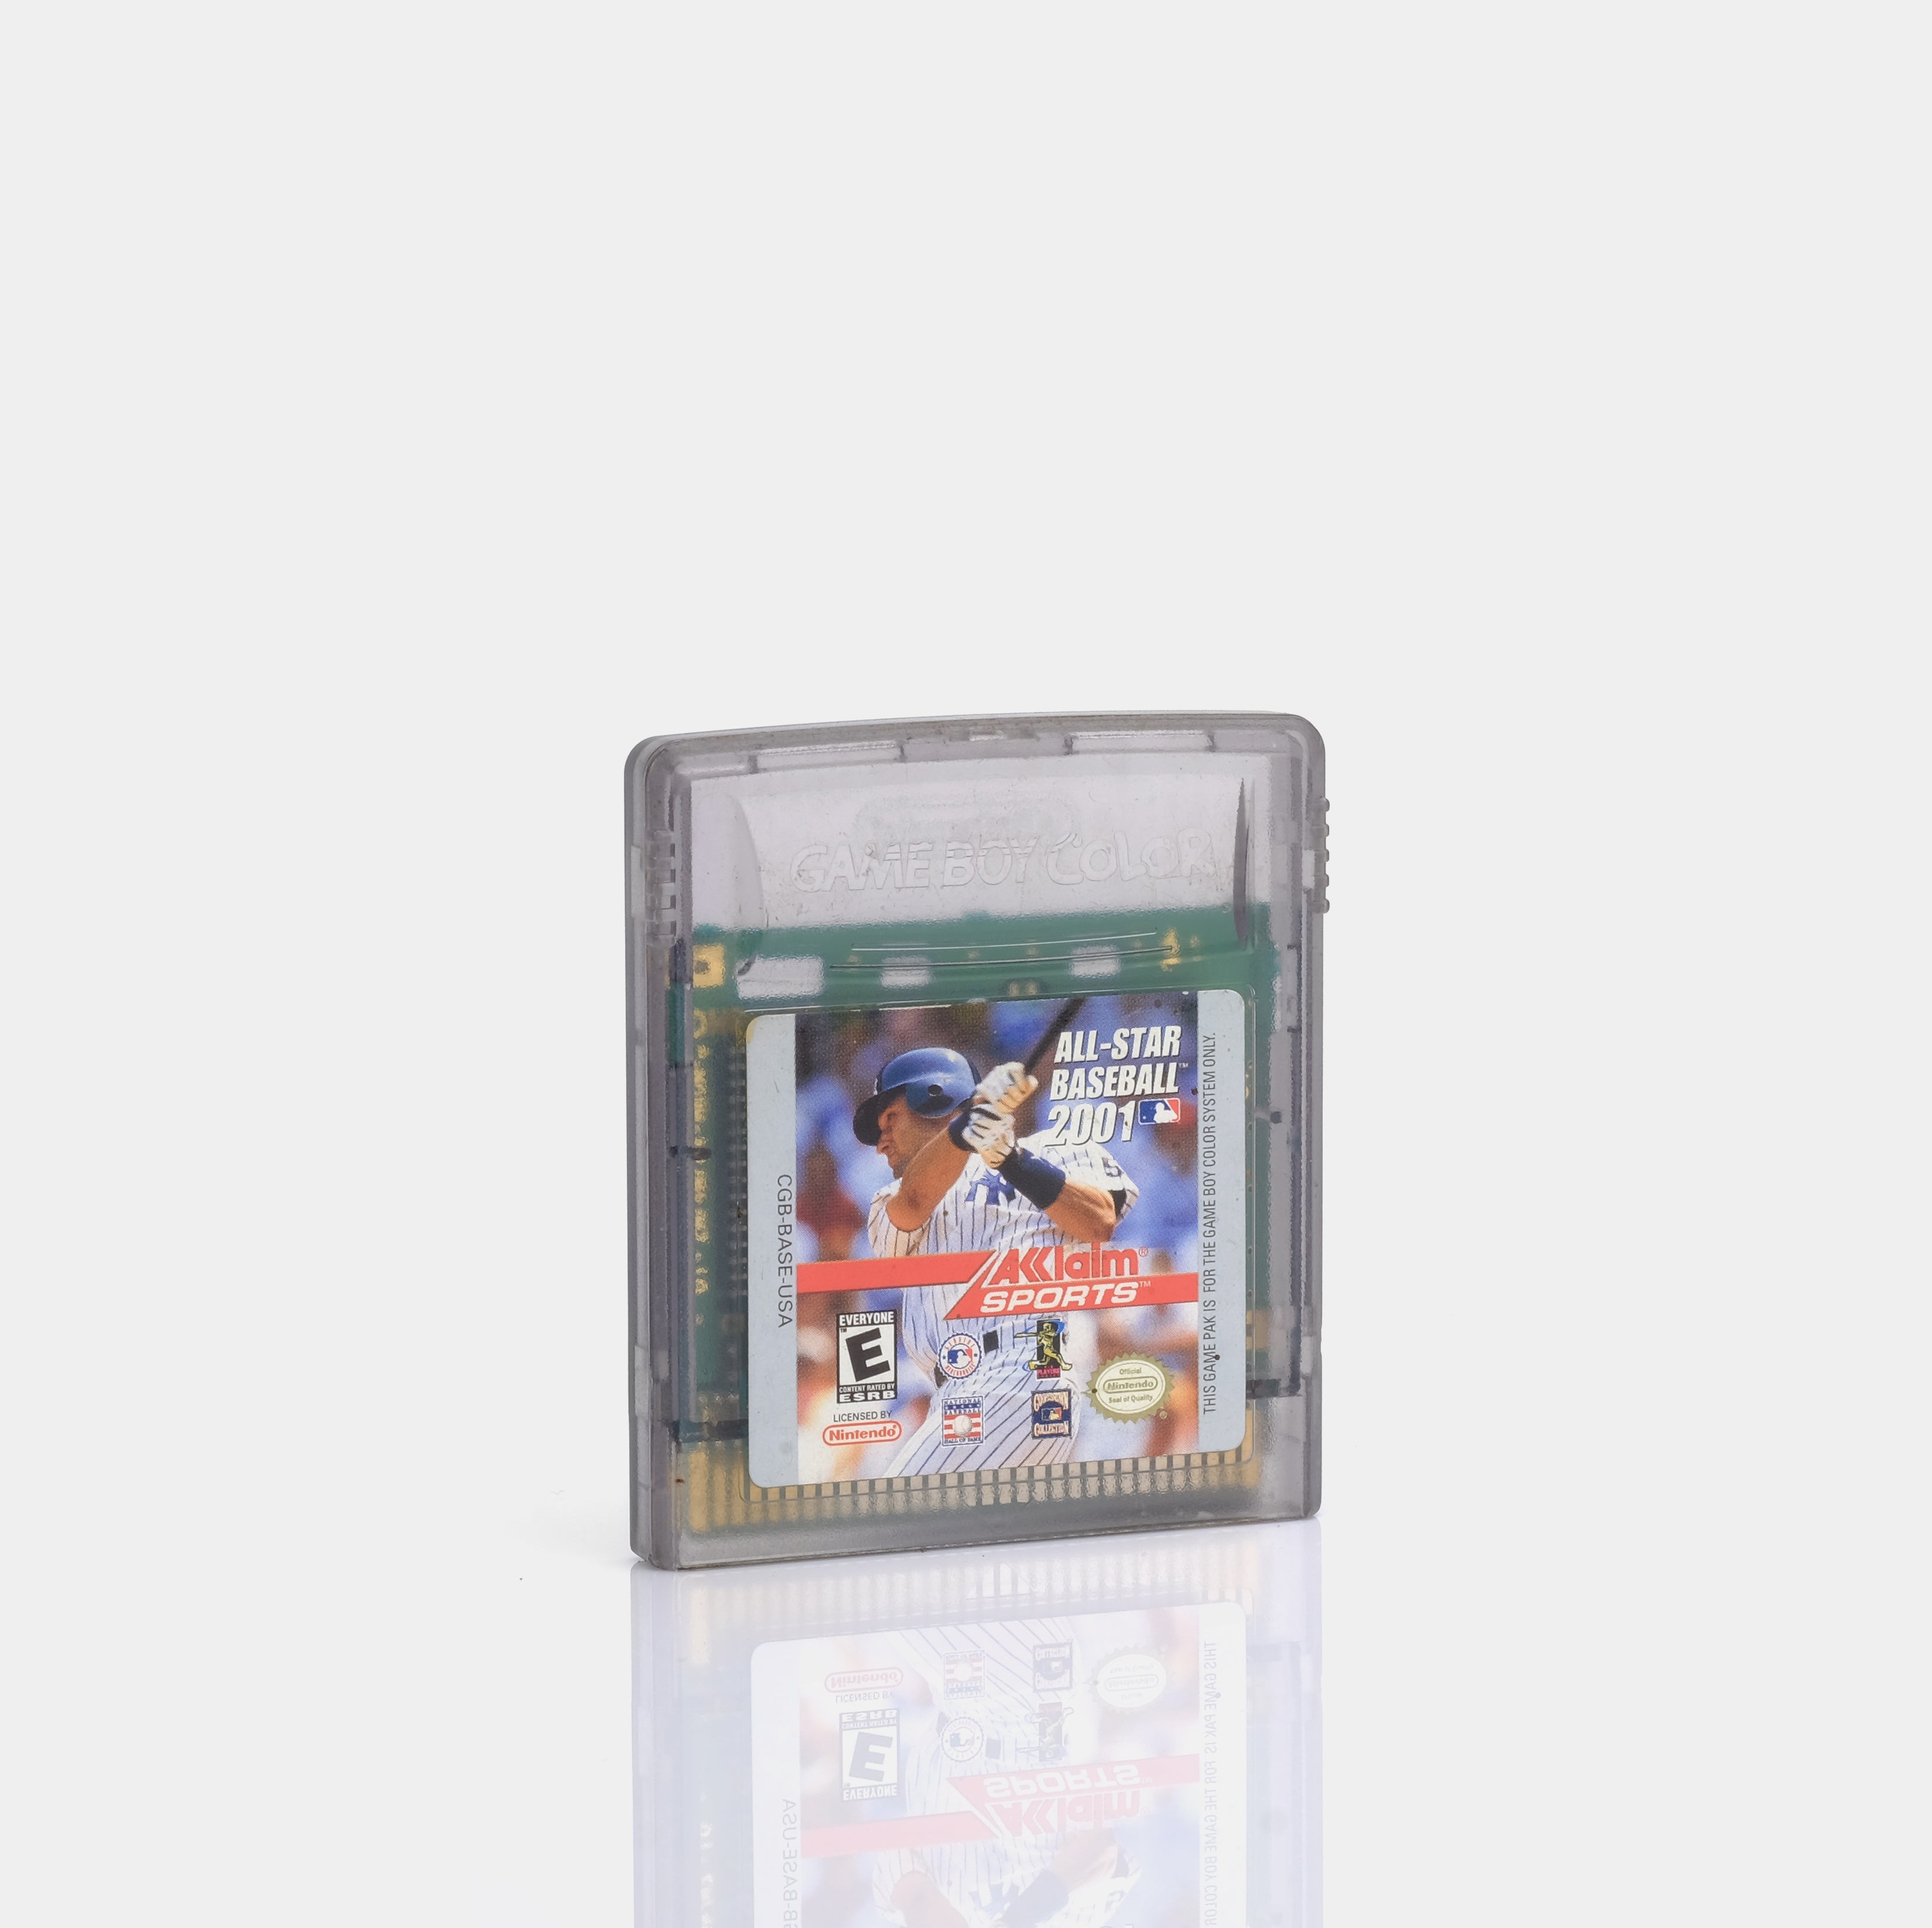 All-Star Baseball 2001 (2000) Game Boy Color Game